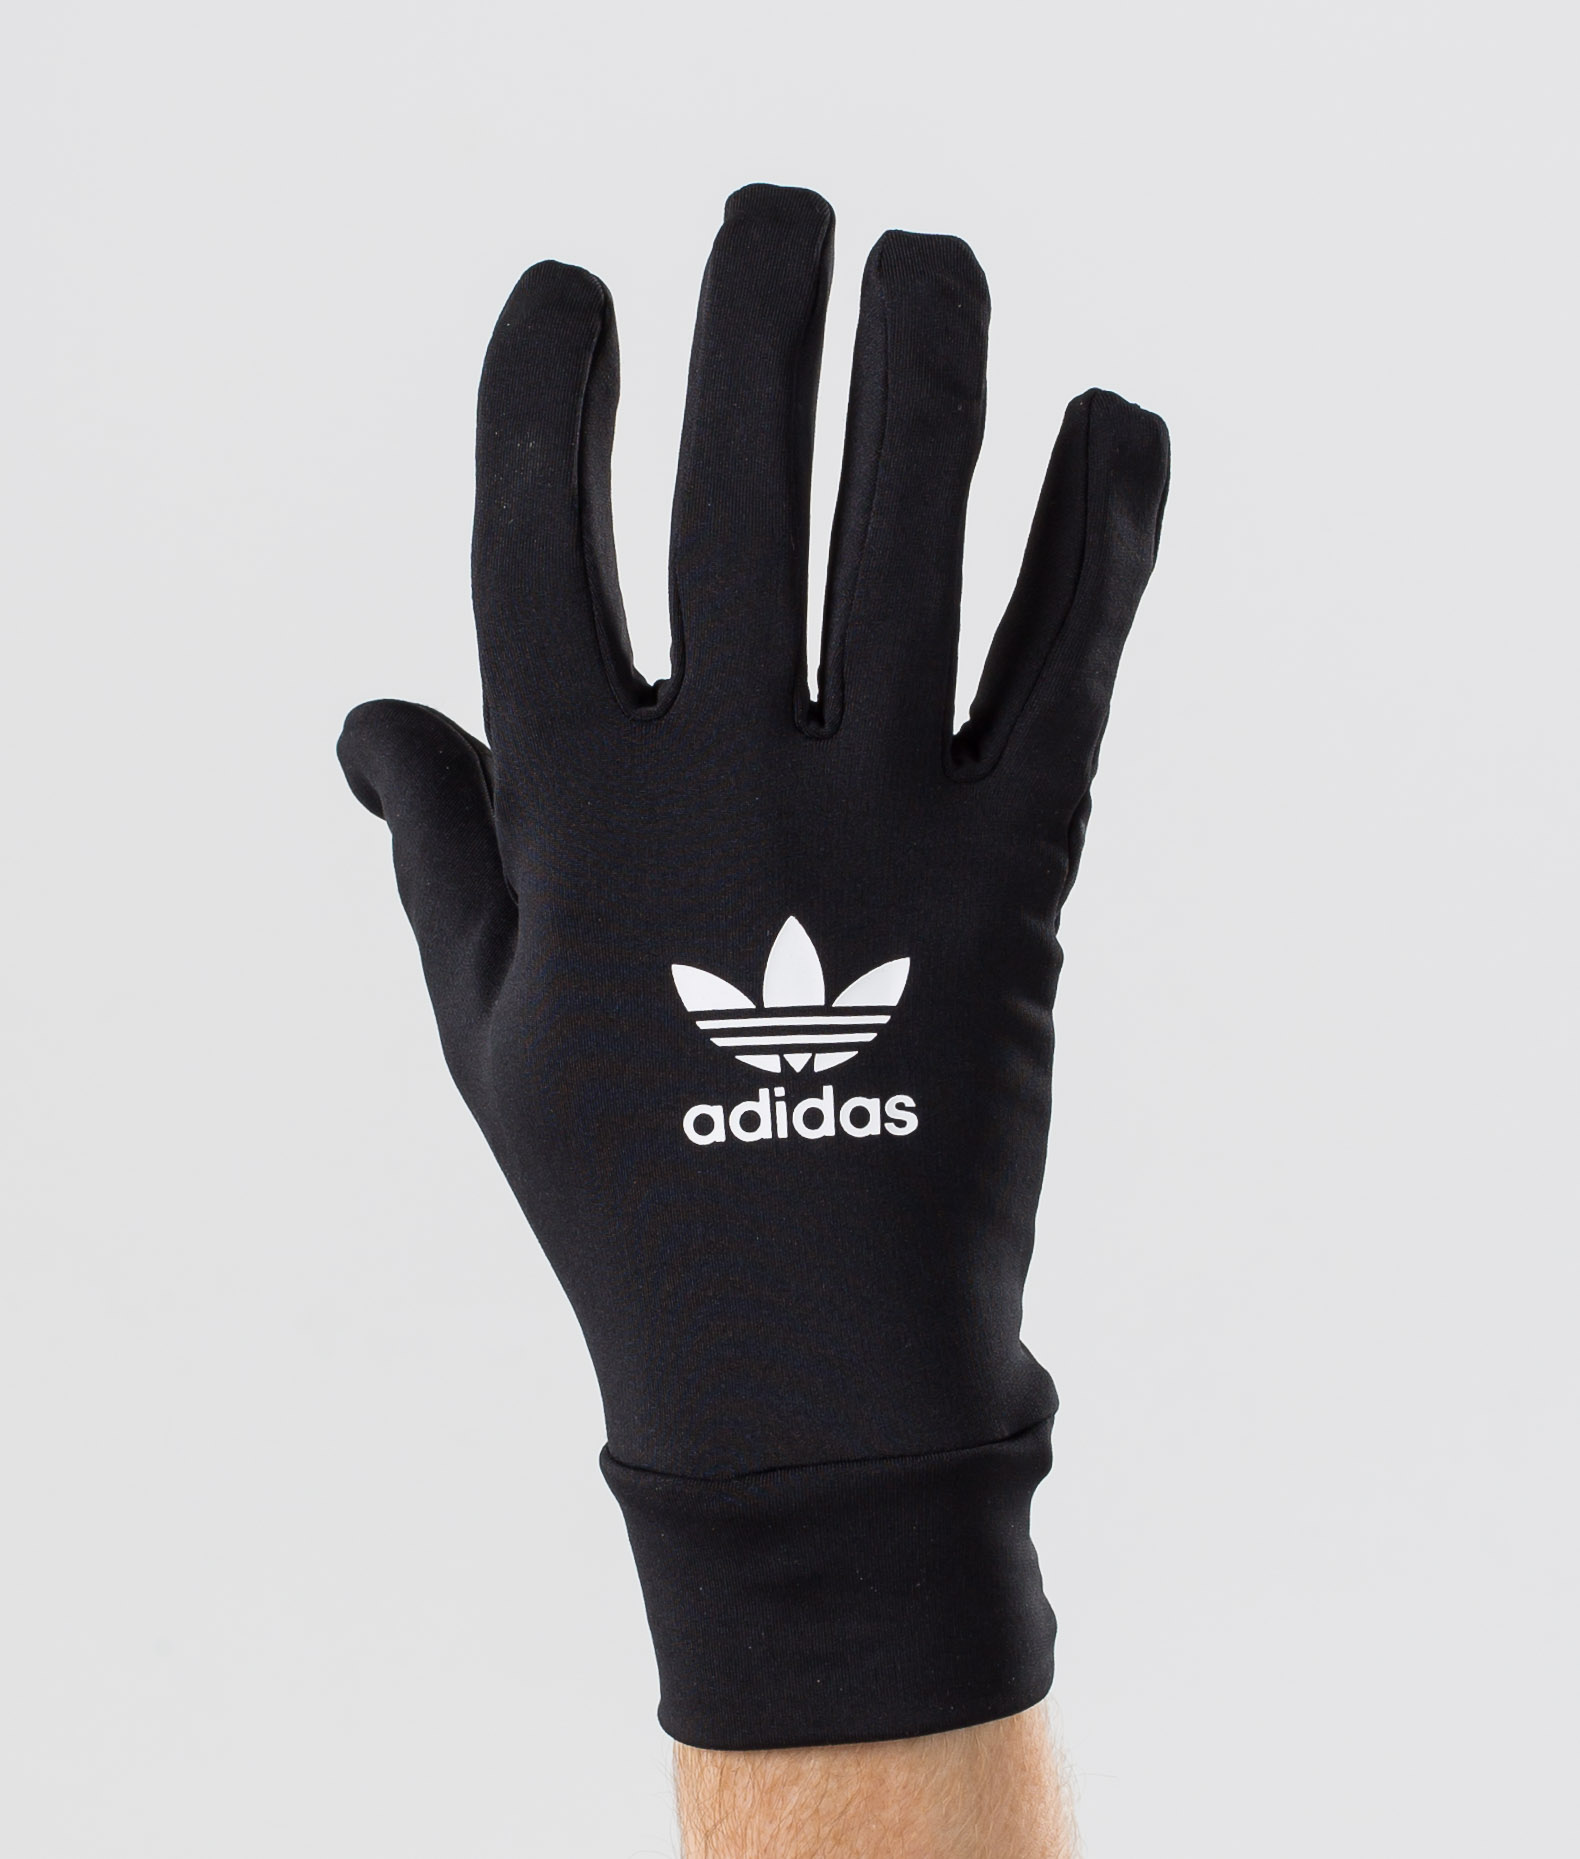 adidas money gloves